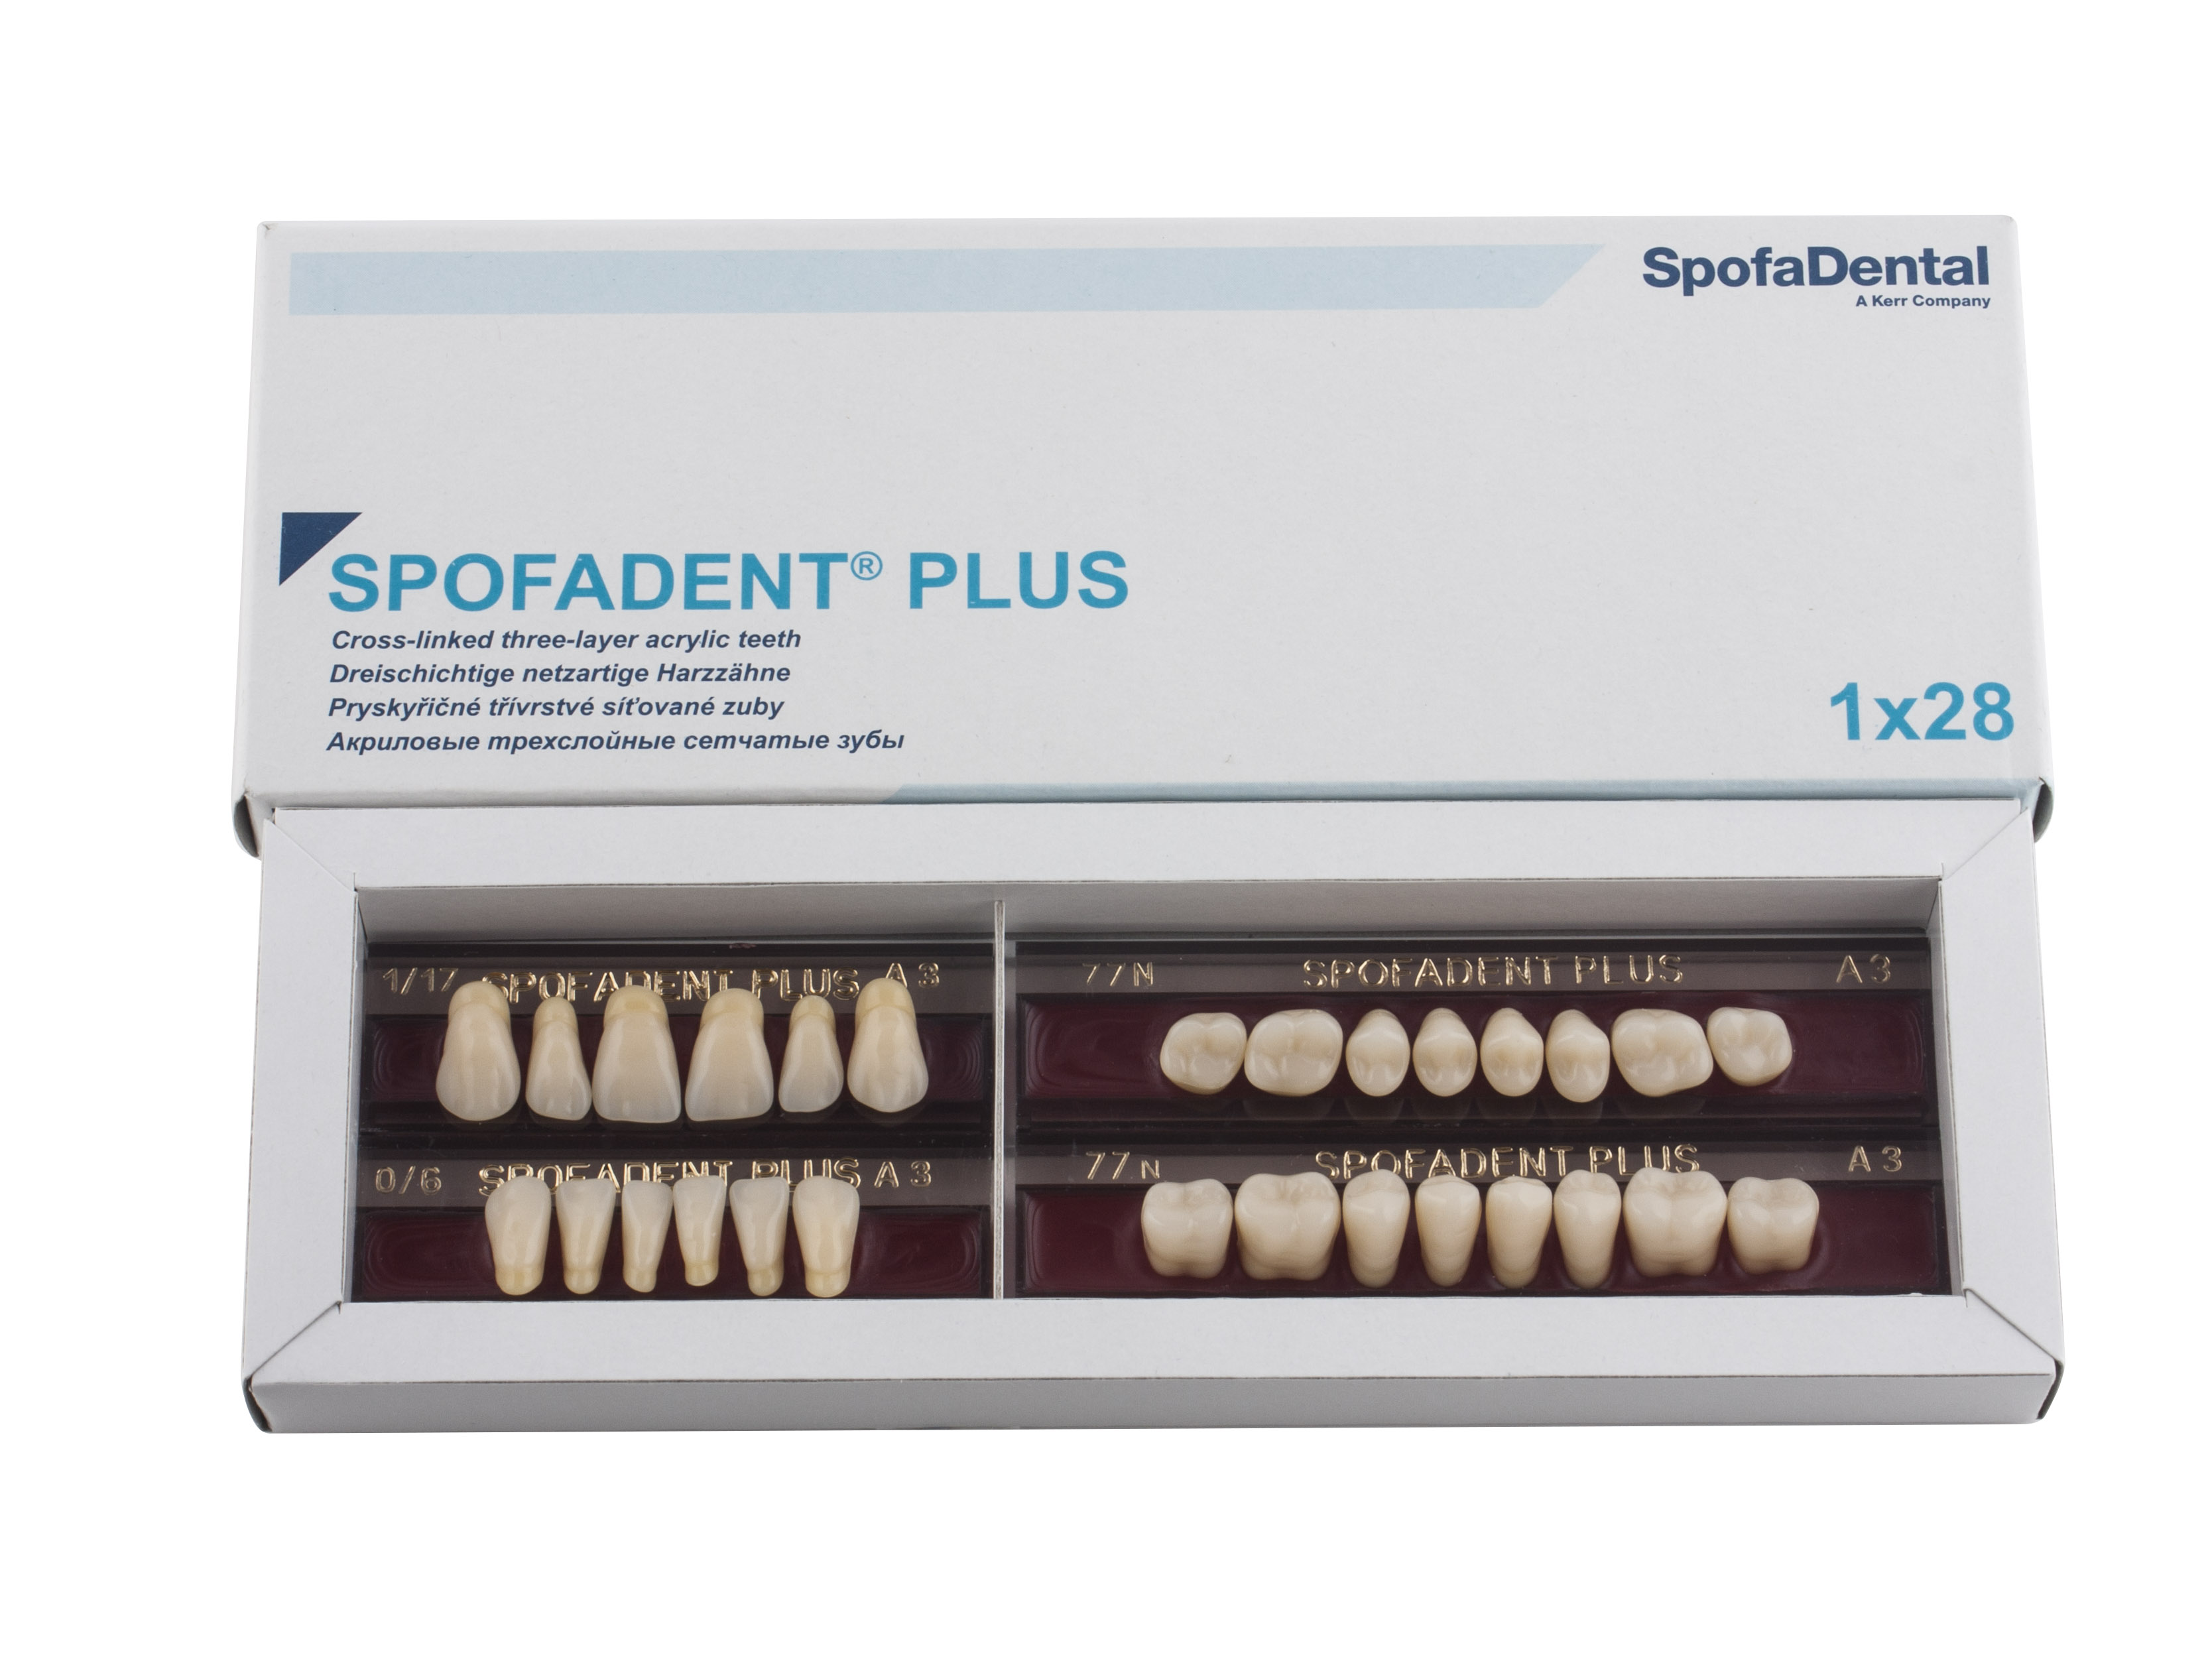 Spofadent Plus (А3) 1/17-0/6-77N